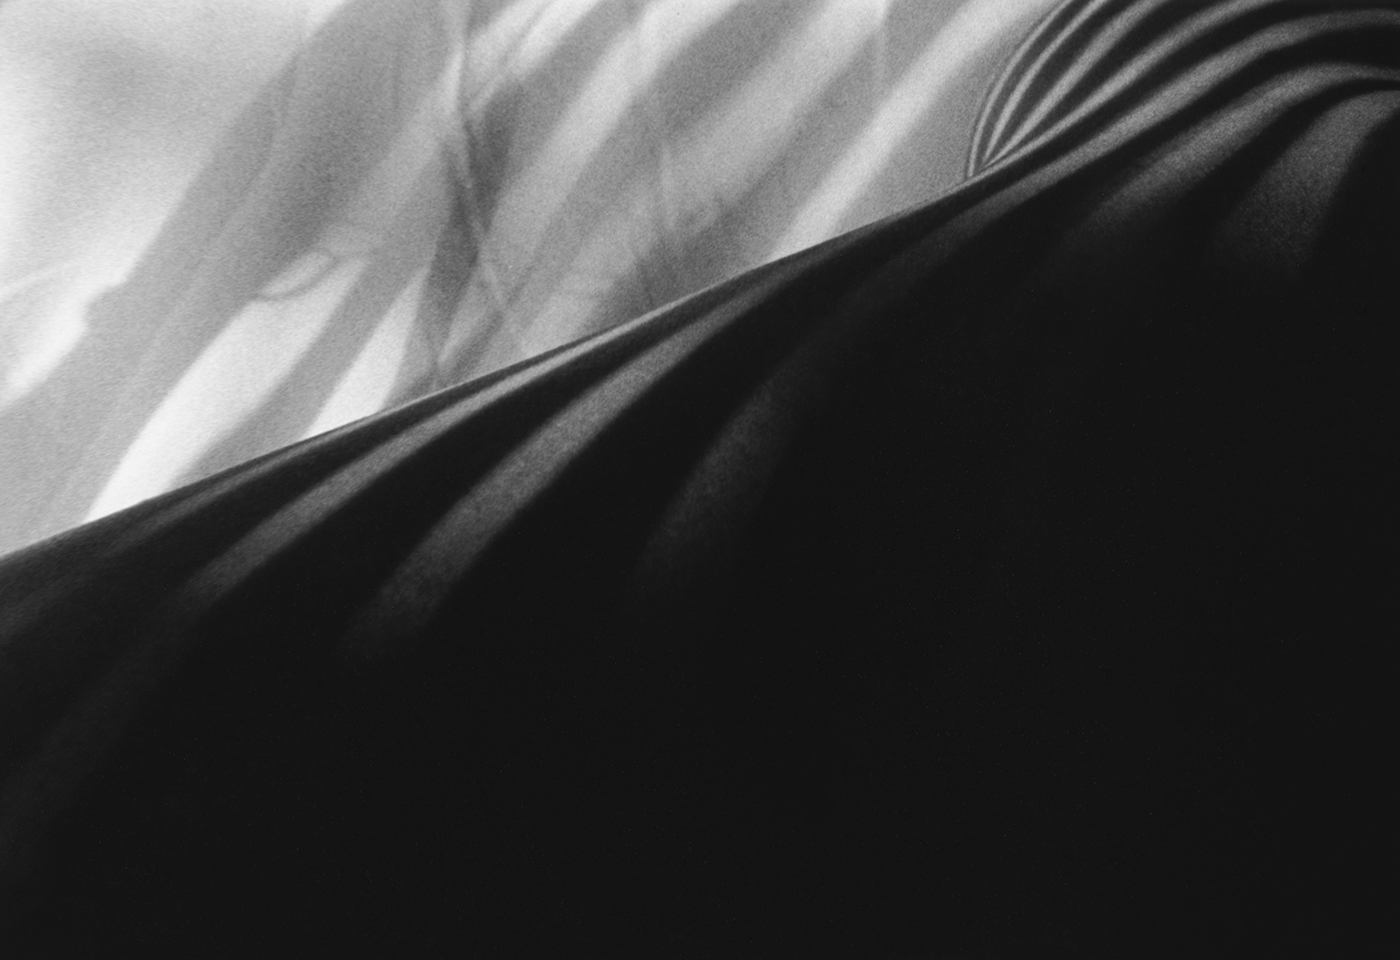 35mm black and white darkroom